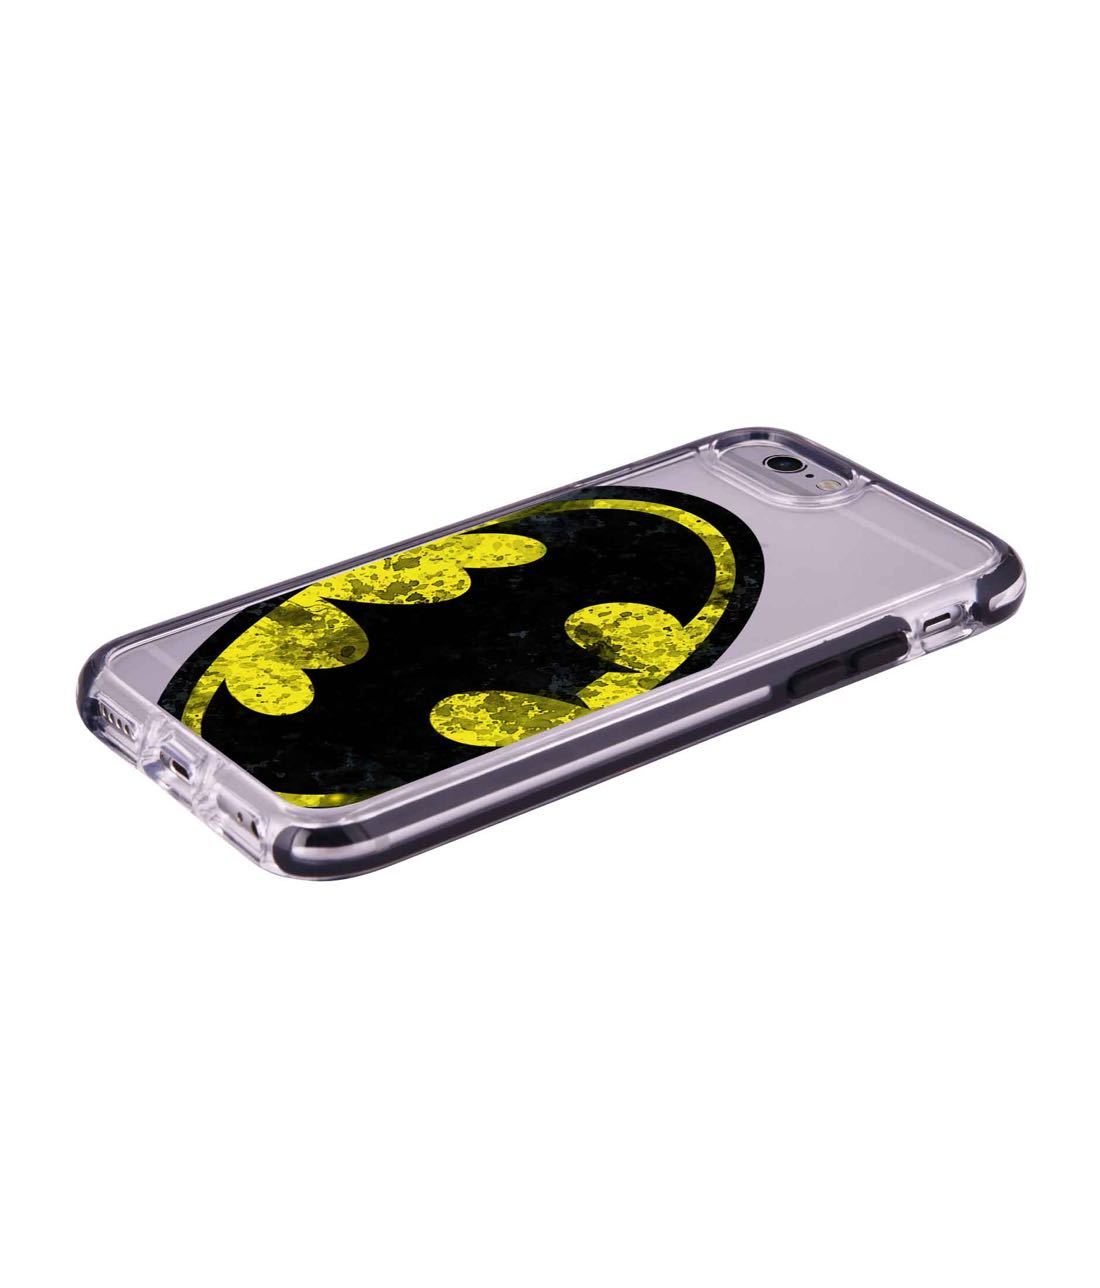 Batman Splatter - Extreme Phone Case for iPhone 6 Plus